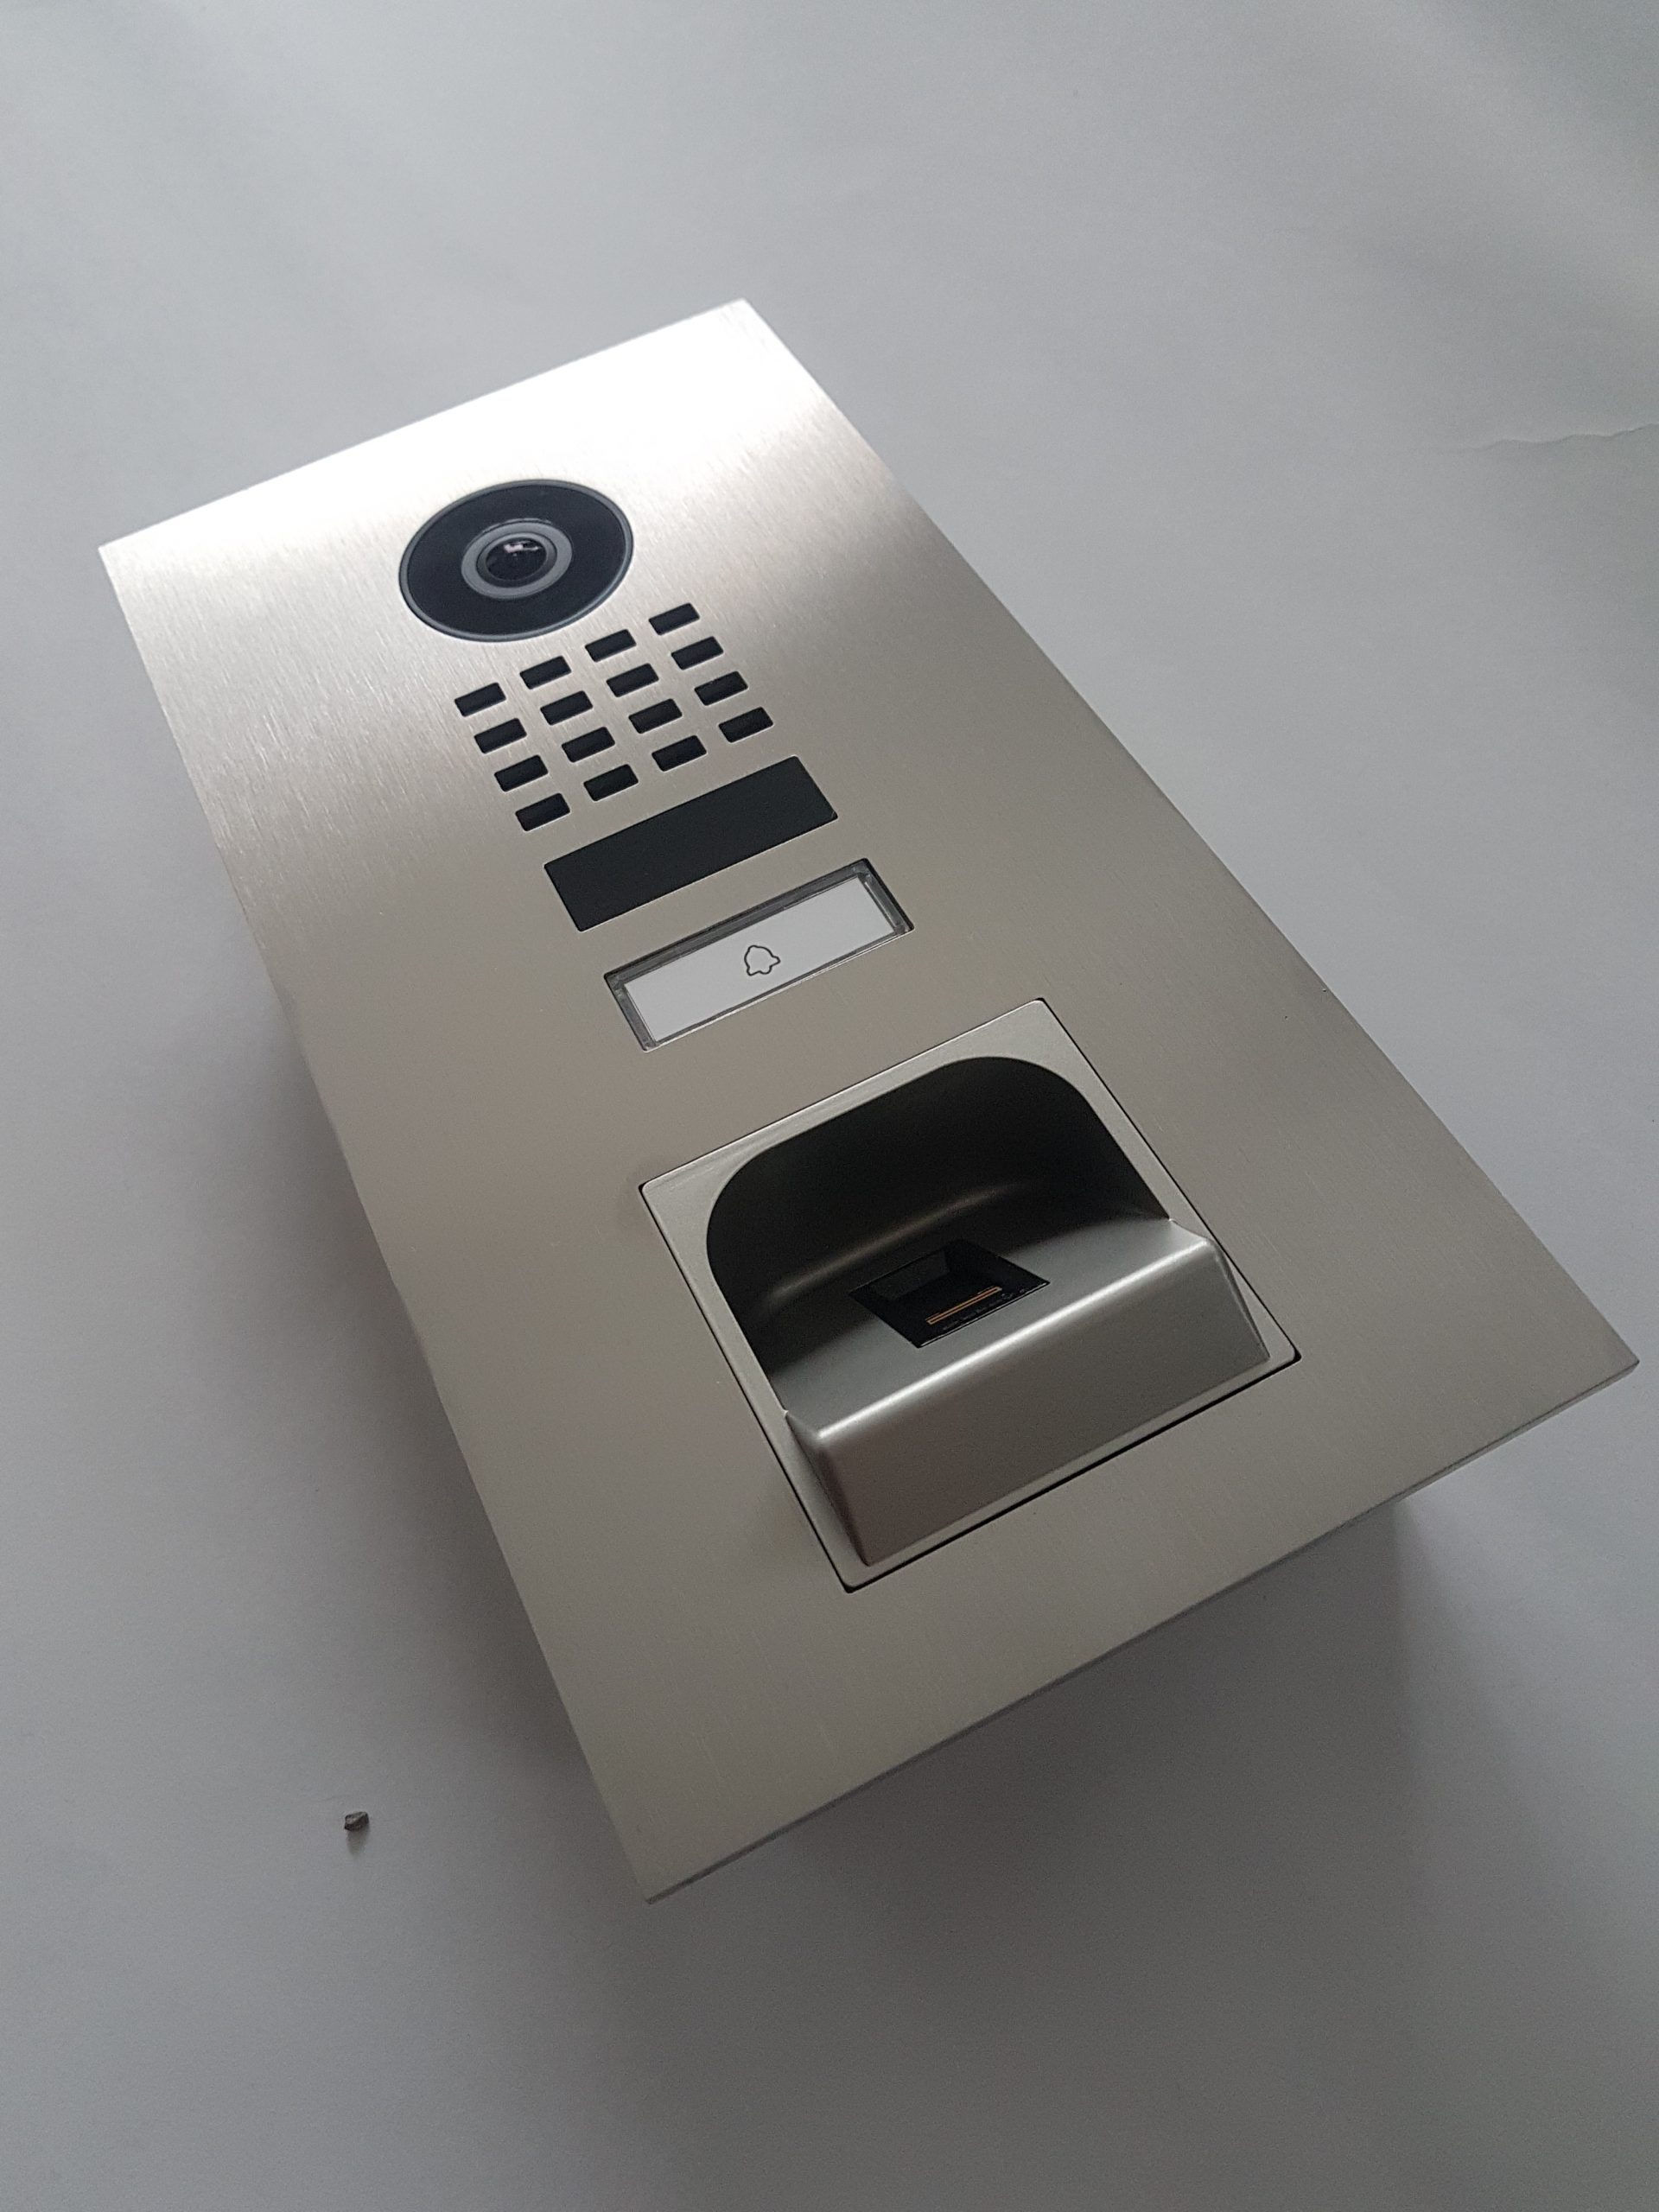 1 Taste Doorbird IP Video Türstation Gegensprechanlage D1101 mit ekey  Fingerprint – Faul Metall Onlineshop